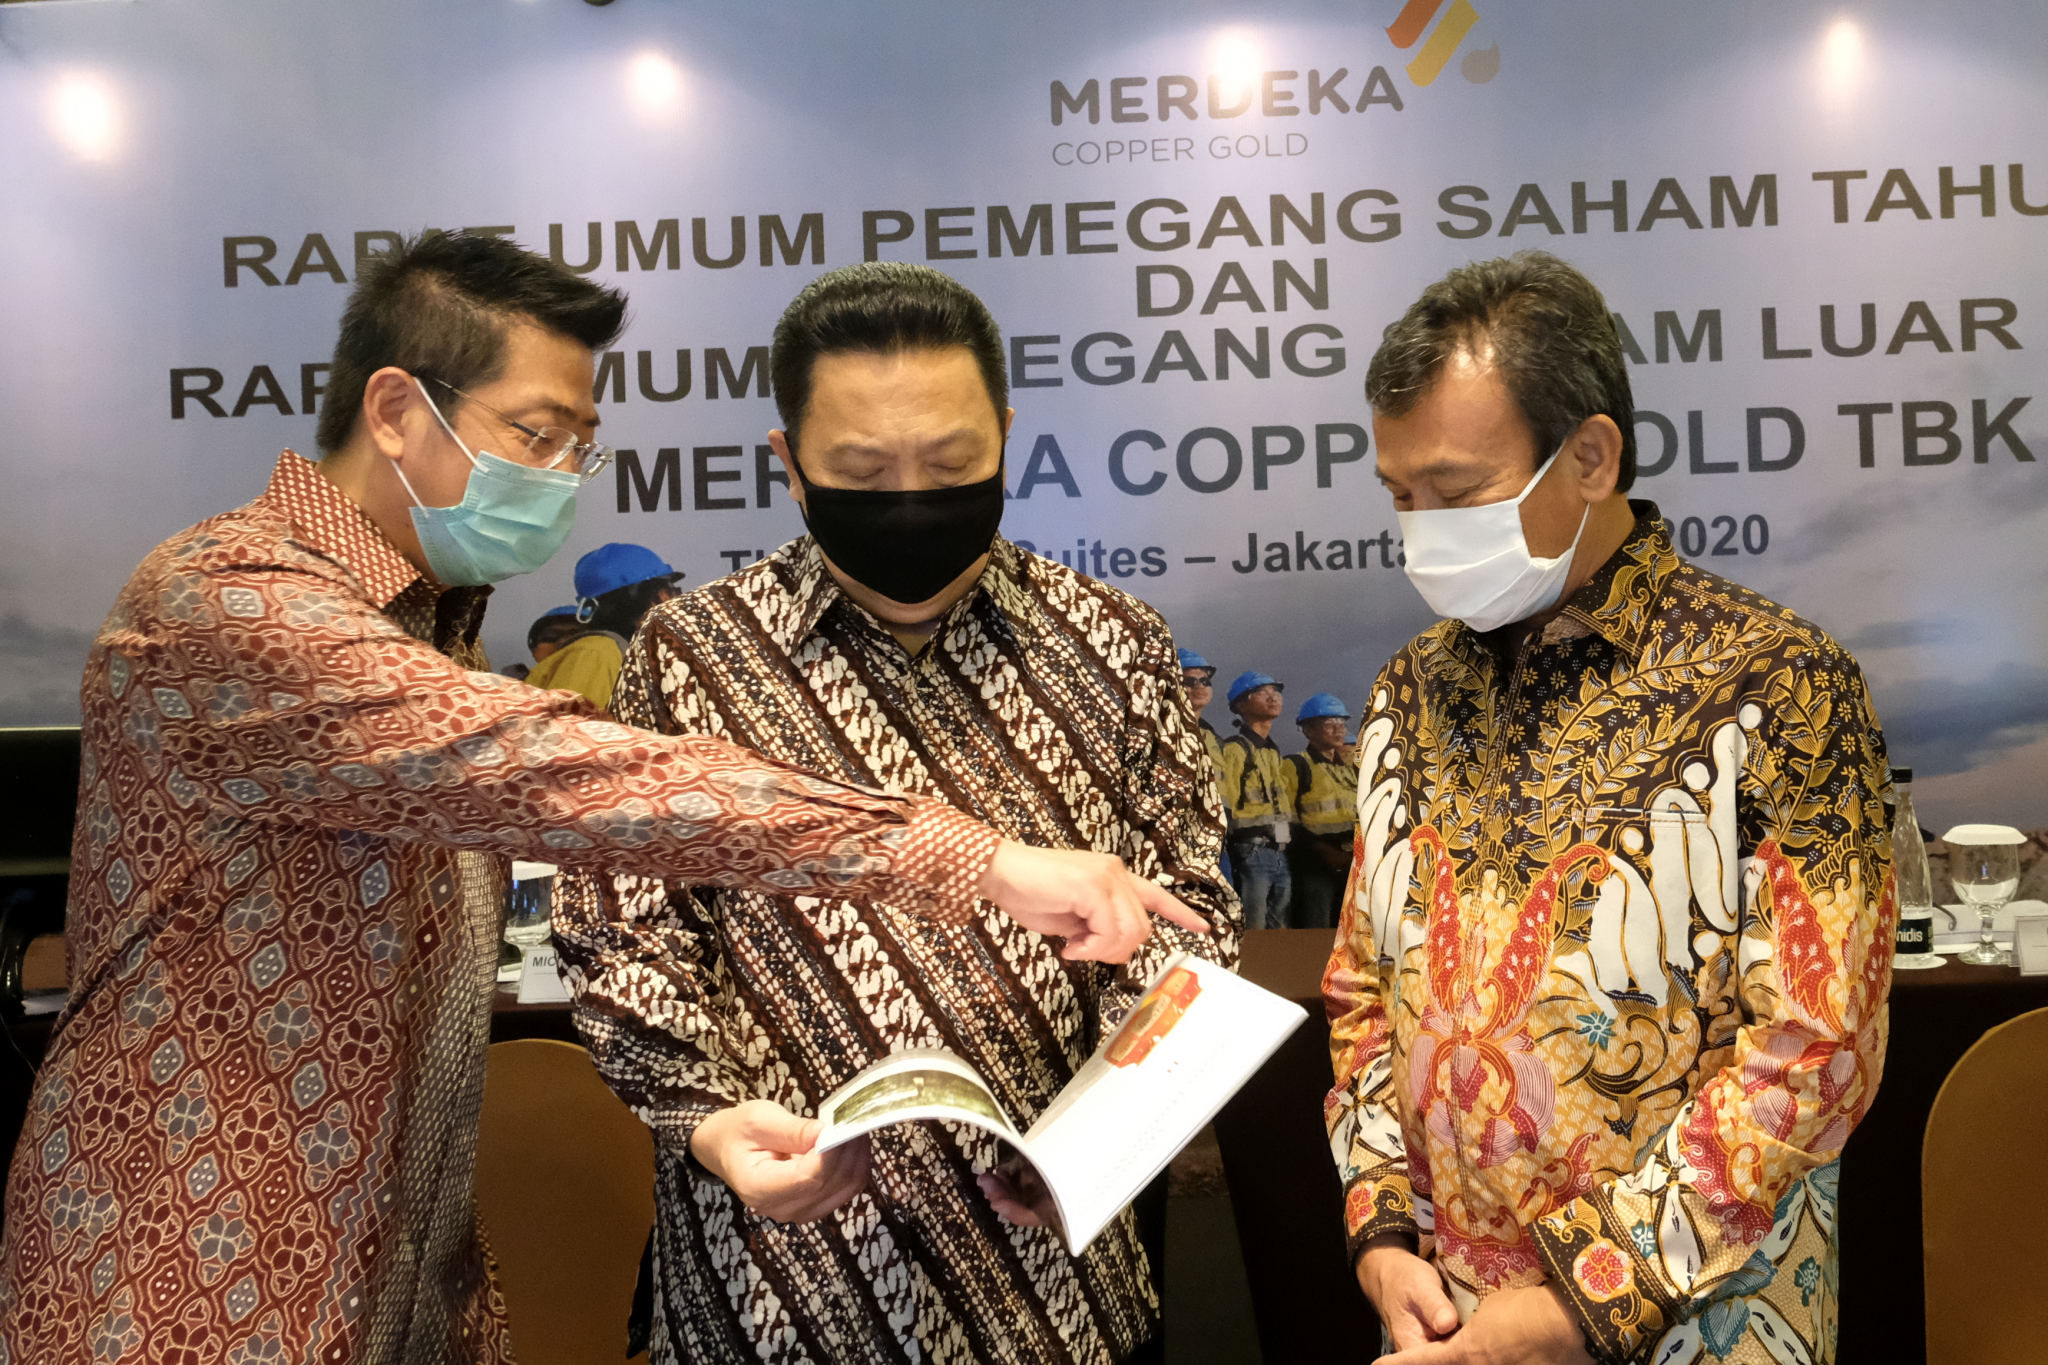 <p>Presiden Direktur PT Merdeka Copper Gold Tbk (MDKA), Tri Boewono (kiri) bersama dengan Komisaris MDKA Garibaldi Thohir (tengah) dan Komisaris Independen MDKA M. Munir (kanan) di sela Rapat Umum Pemegang Saham Tahunan dan Luar Biasa (RUPST dan RUPSLB) di Jakarta, Rabu, 29 Juli 2020. MDKA mencatatkan kinerja gemilang pada 2019 dengan diselesaikannya proyek ekspansi oksida di Tambang Emas Tujuh Bukit serta produksi emas dan perak perusahaan melampaui target 2019 dibandingkan dari tahun sebelumnya. Dalam RUPSLB hari ini, para pemegang saham MDKA menyepakati untuk melakukan pembelian kembali saham atau _buyback_ sebanyak-banyaknya 2% saham dari seluruh modal ditempatkan dan disetor penuh Perseroan dengan alokasi dana maksimal Rp 568 miliar dilaksanakan secara bertahap sampai paling lama 18 bulan. Foto: Ismail Pohan/TrenAsia</p>
